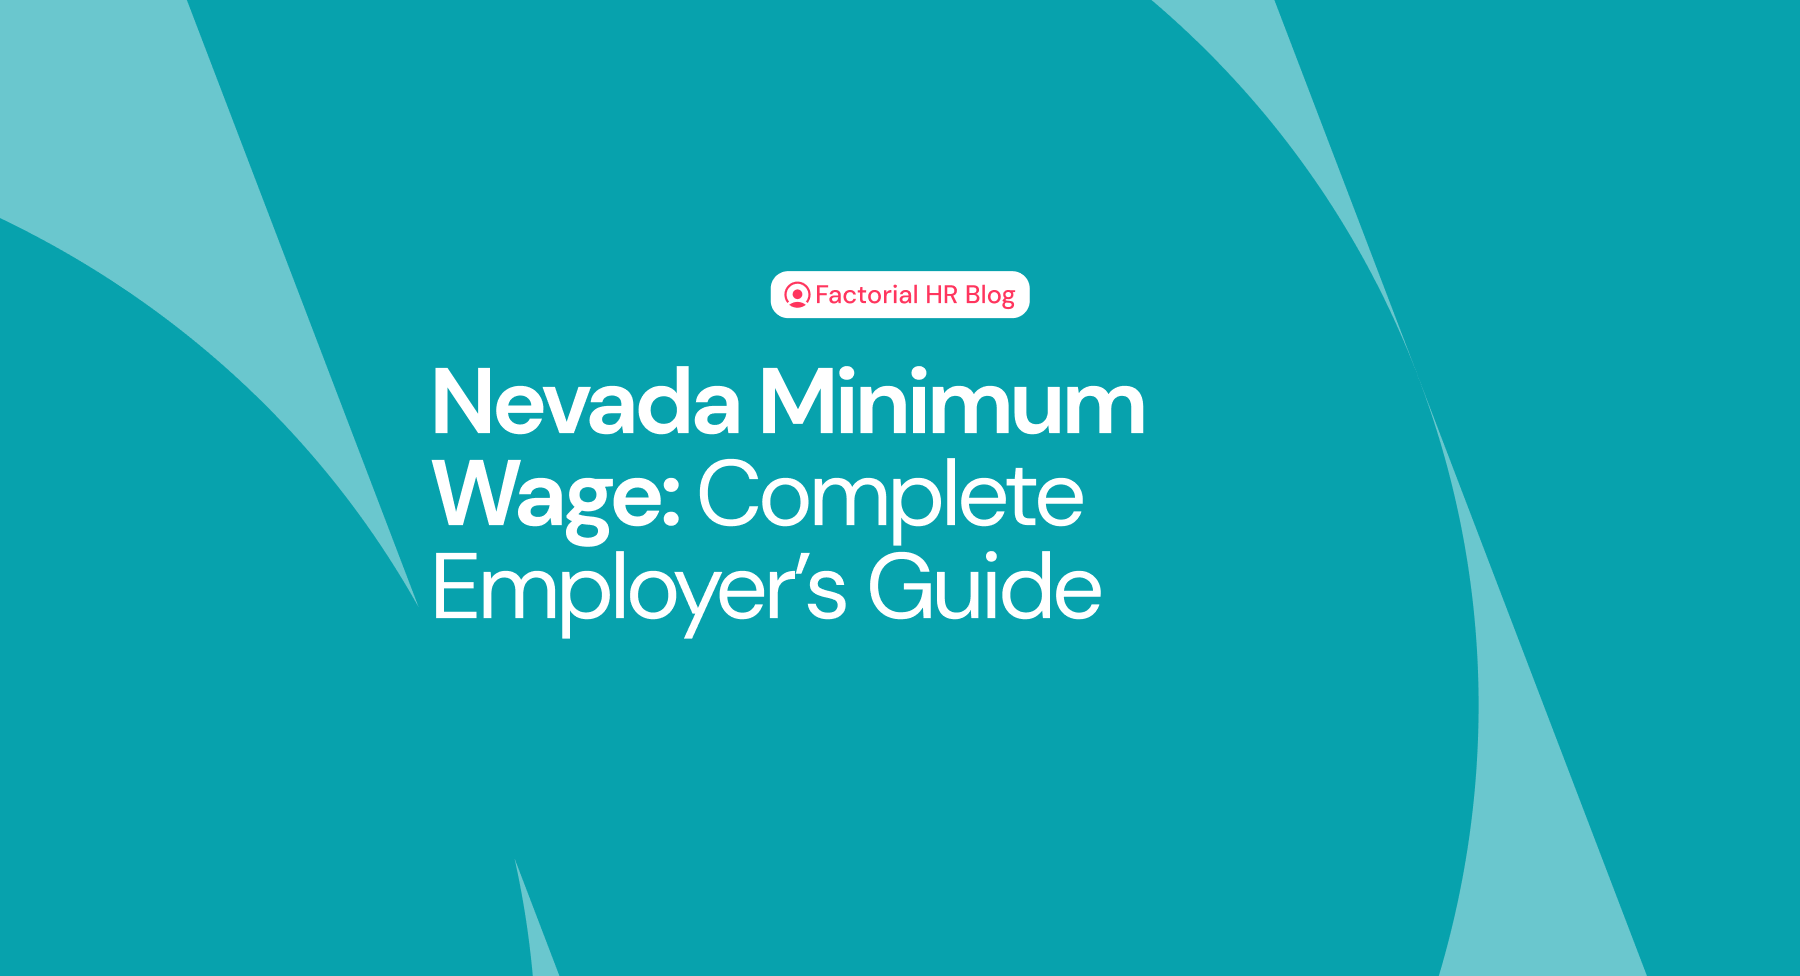 Nevada minimum wage